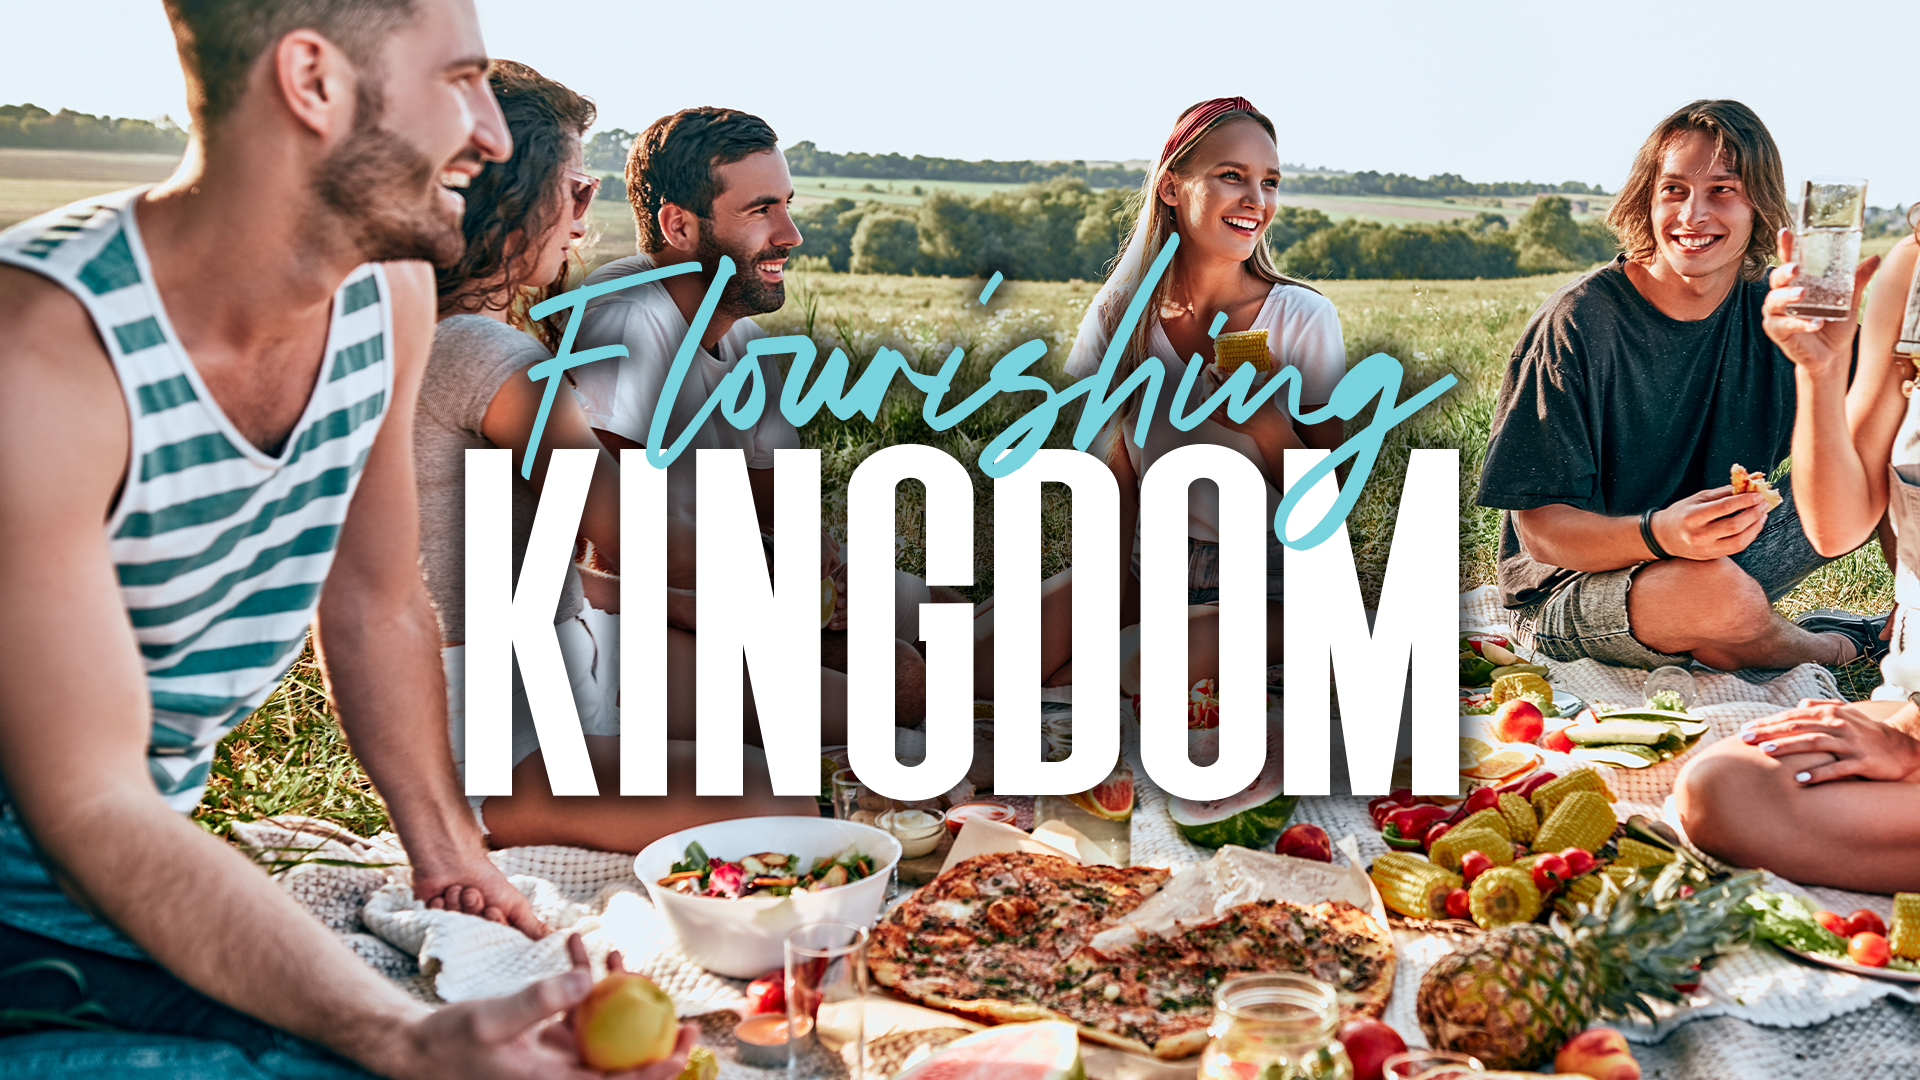 Flourishing Kingdom